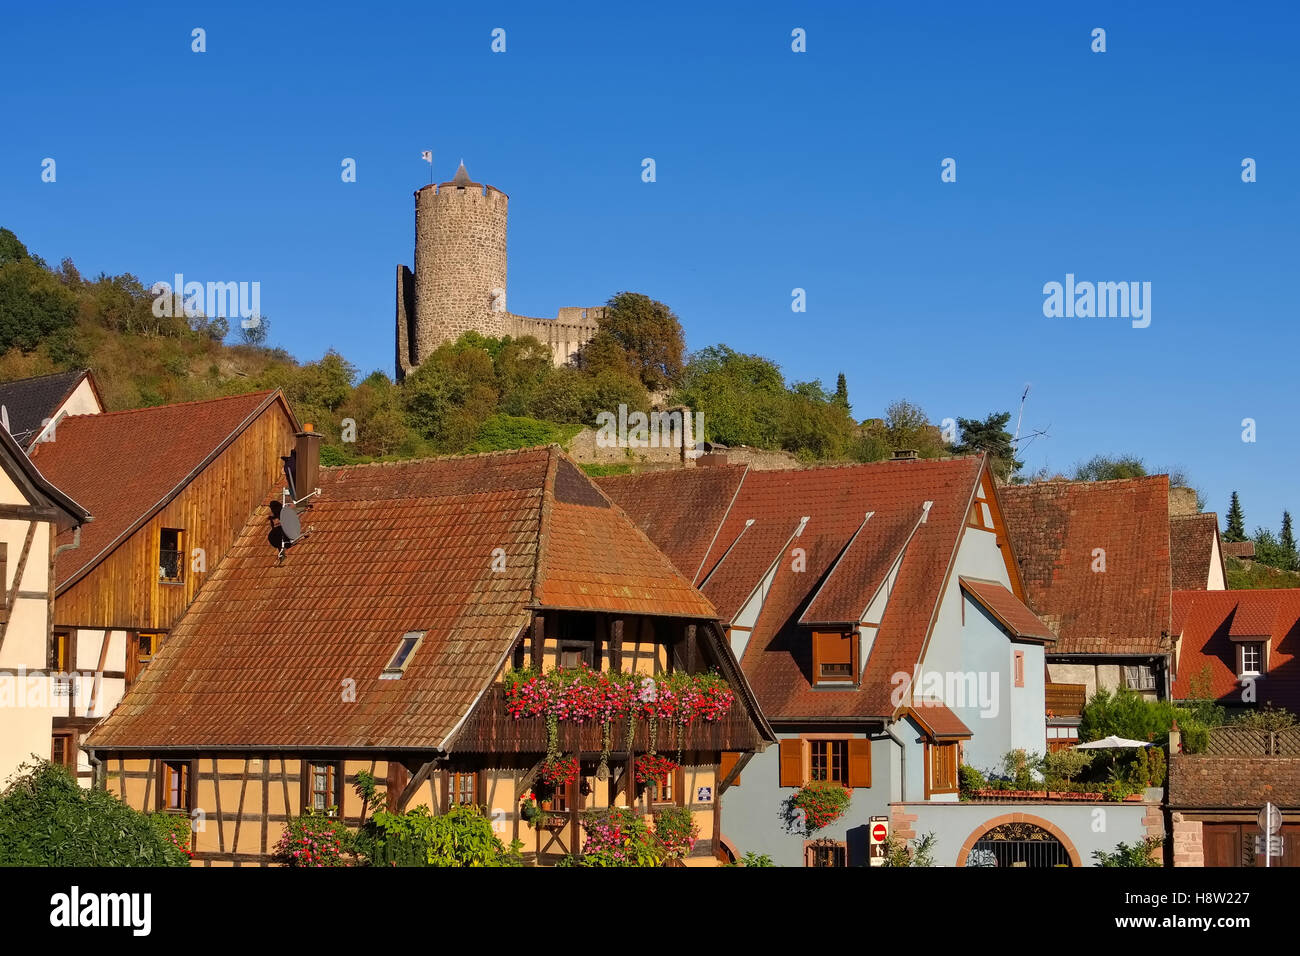 Stadtansicht Kaysersberg im Elsass, Frankreich - townscape Kaysersberg, Alsace in France Stock Photo